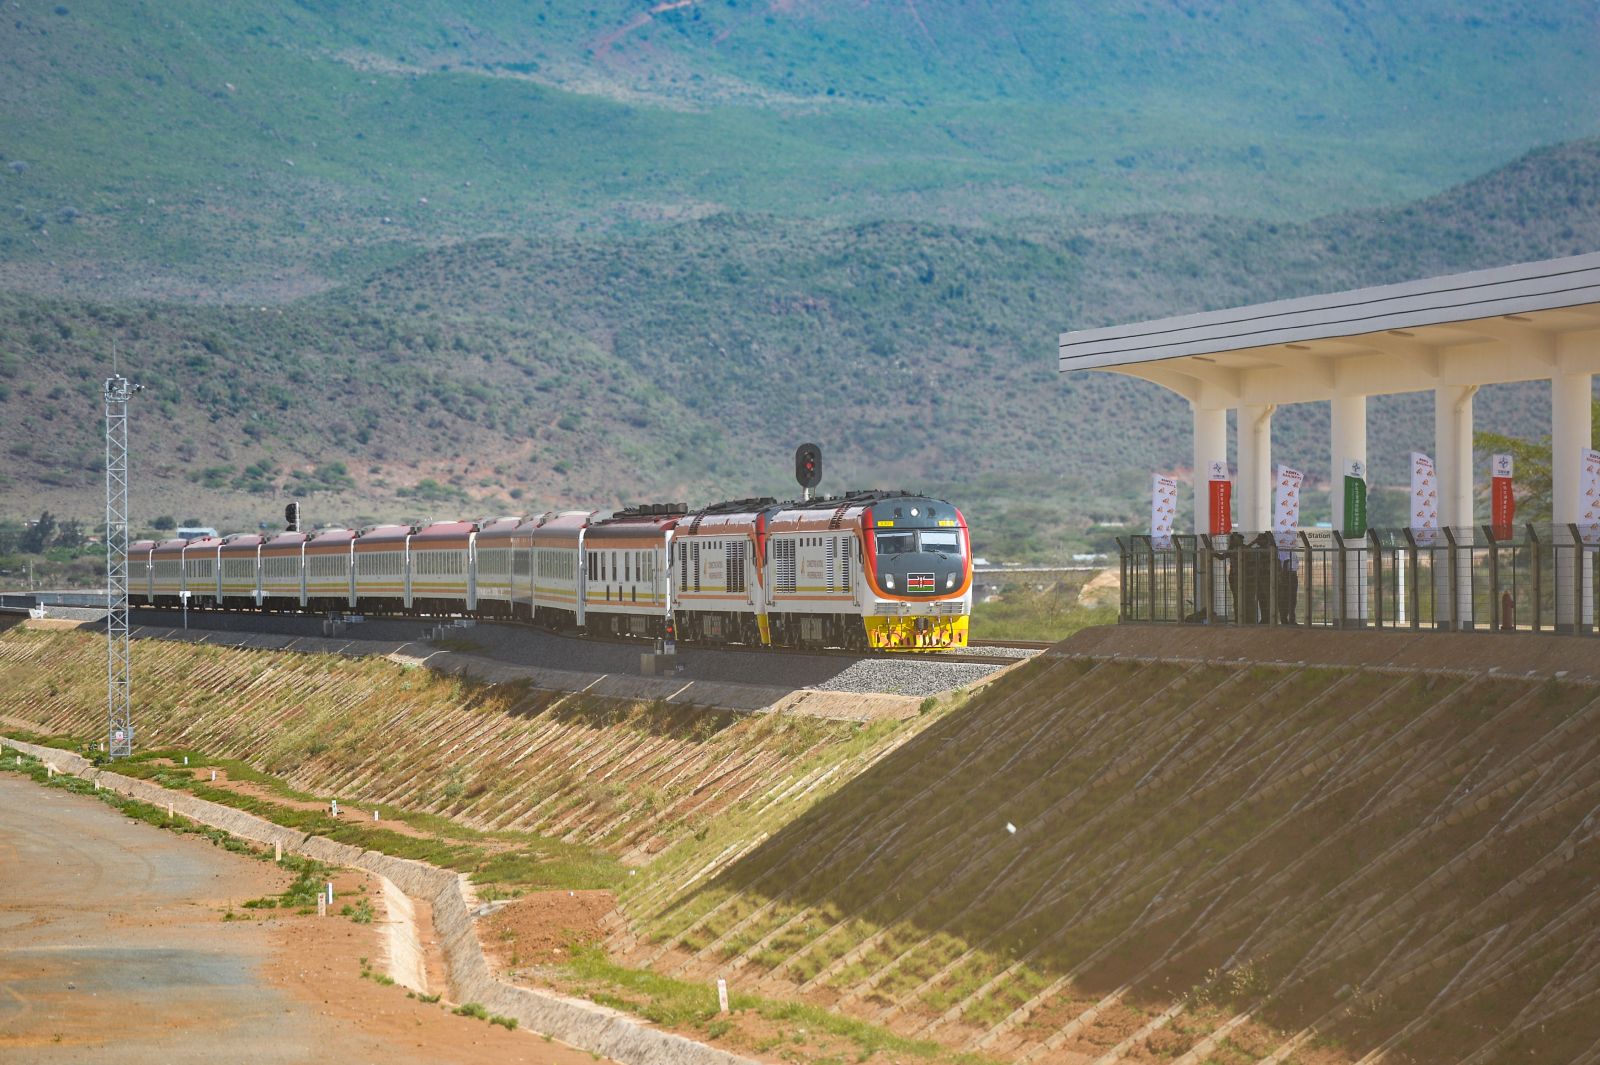 A train approaching Maai Mahiu station on the way to Naivasha.